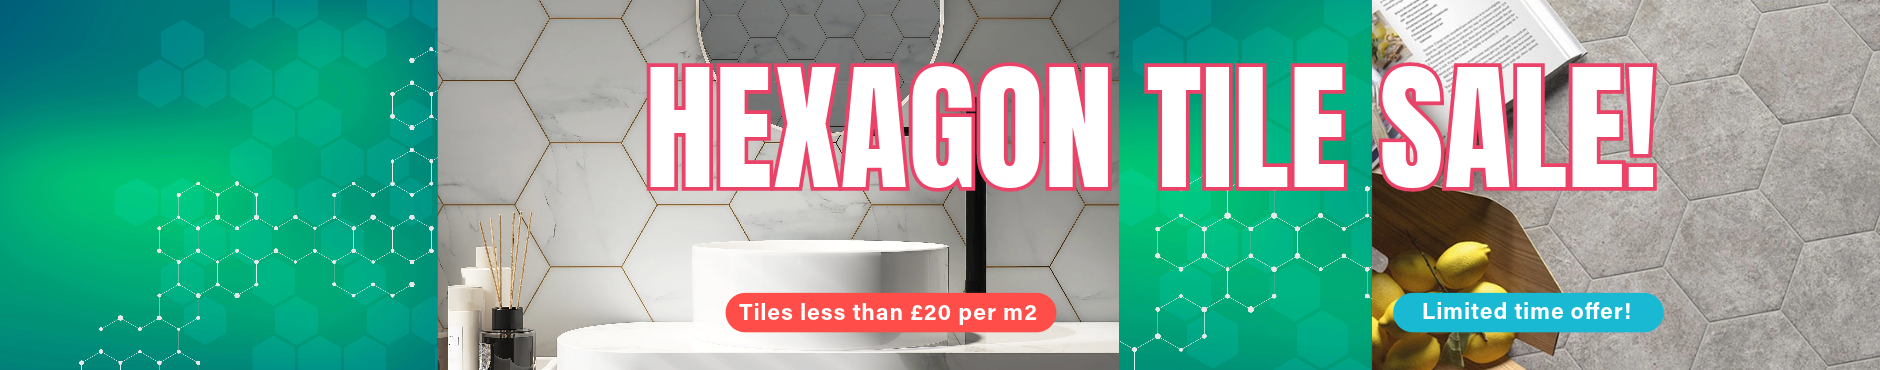 Hexagon tile sale